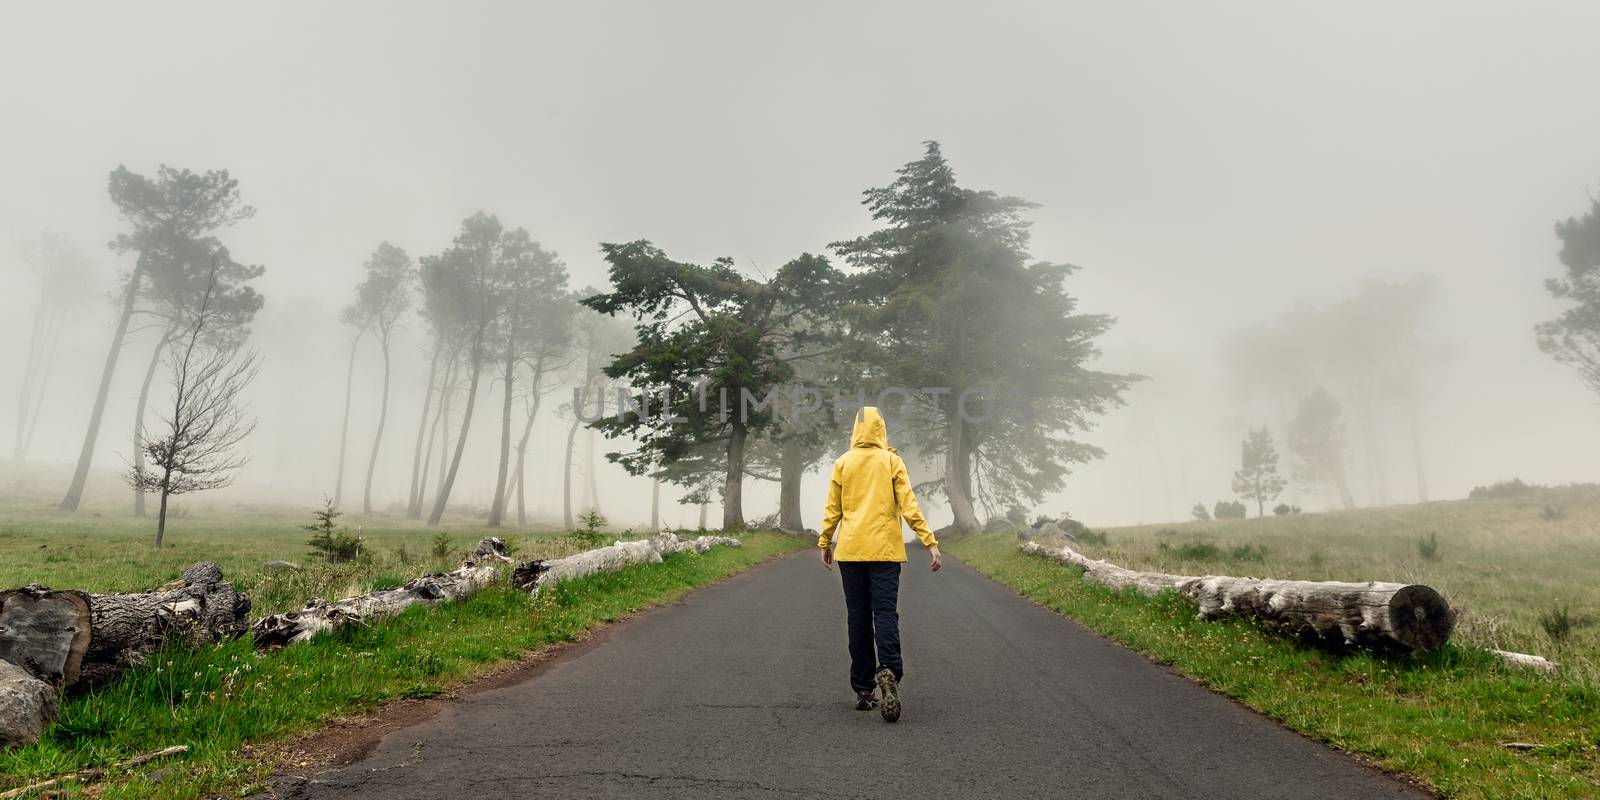 Walking on a foggy road by Iko